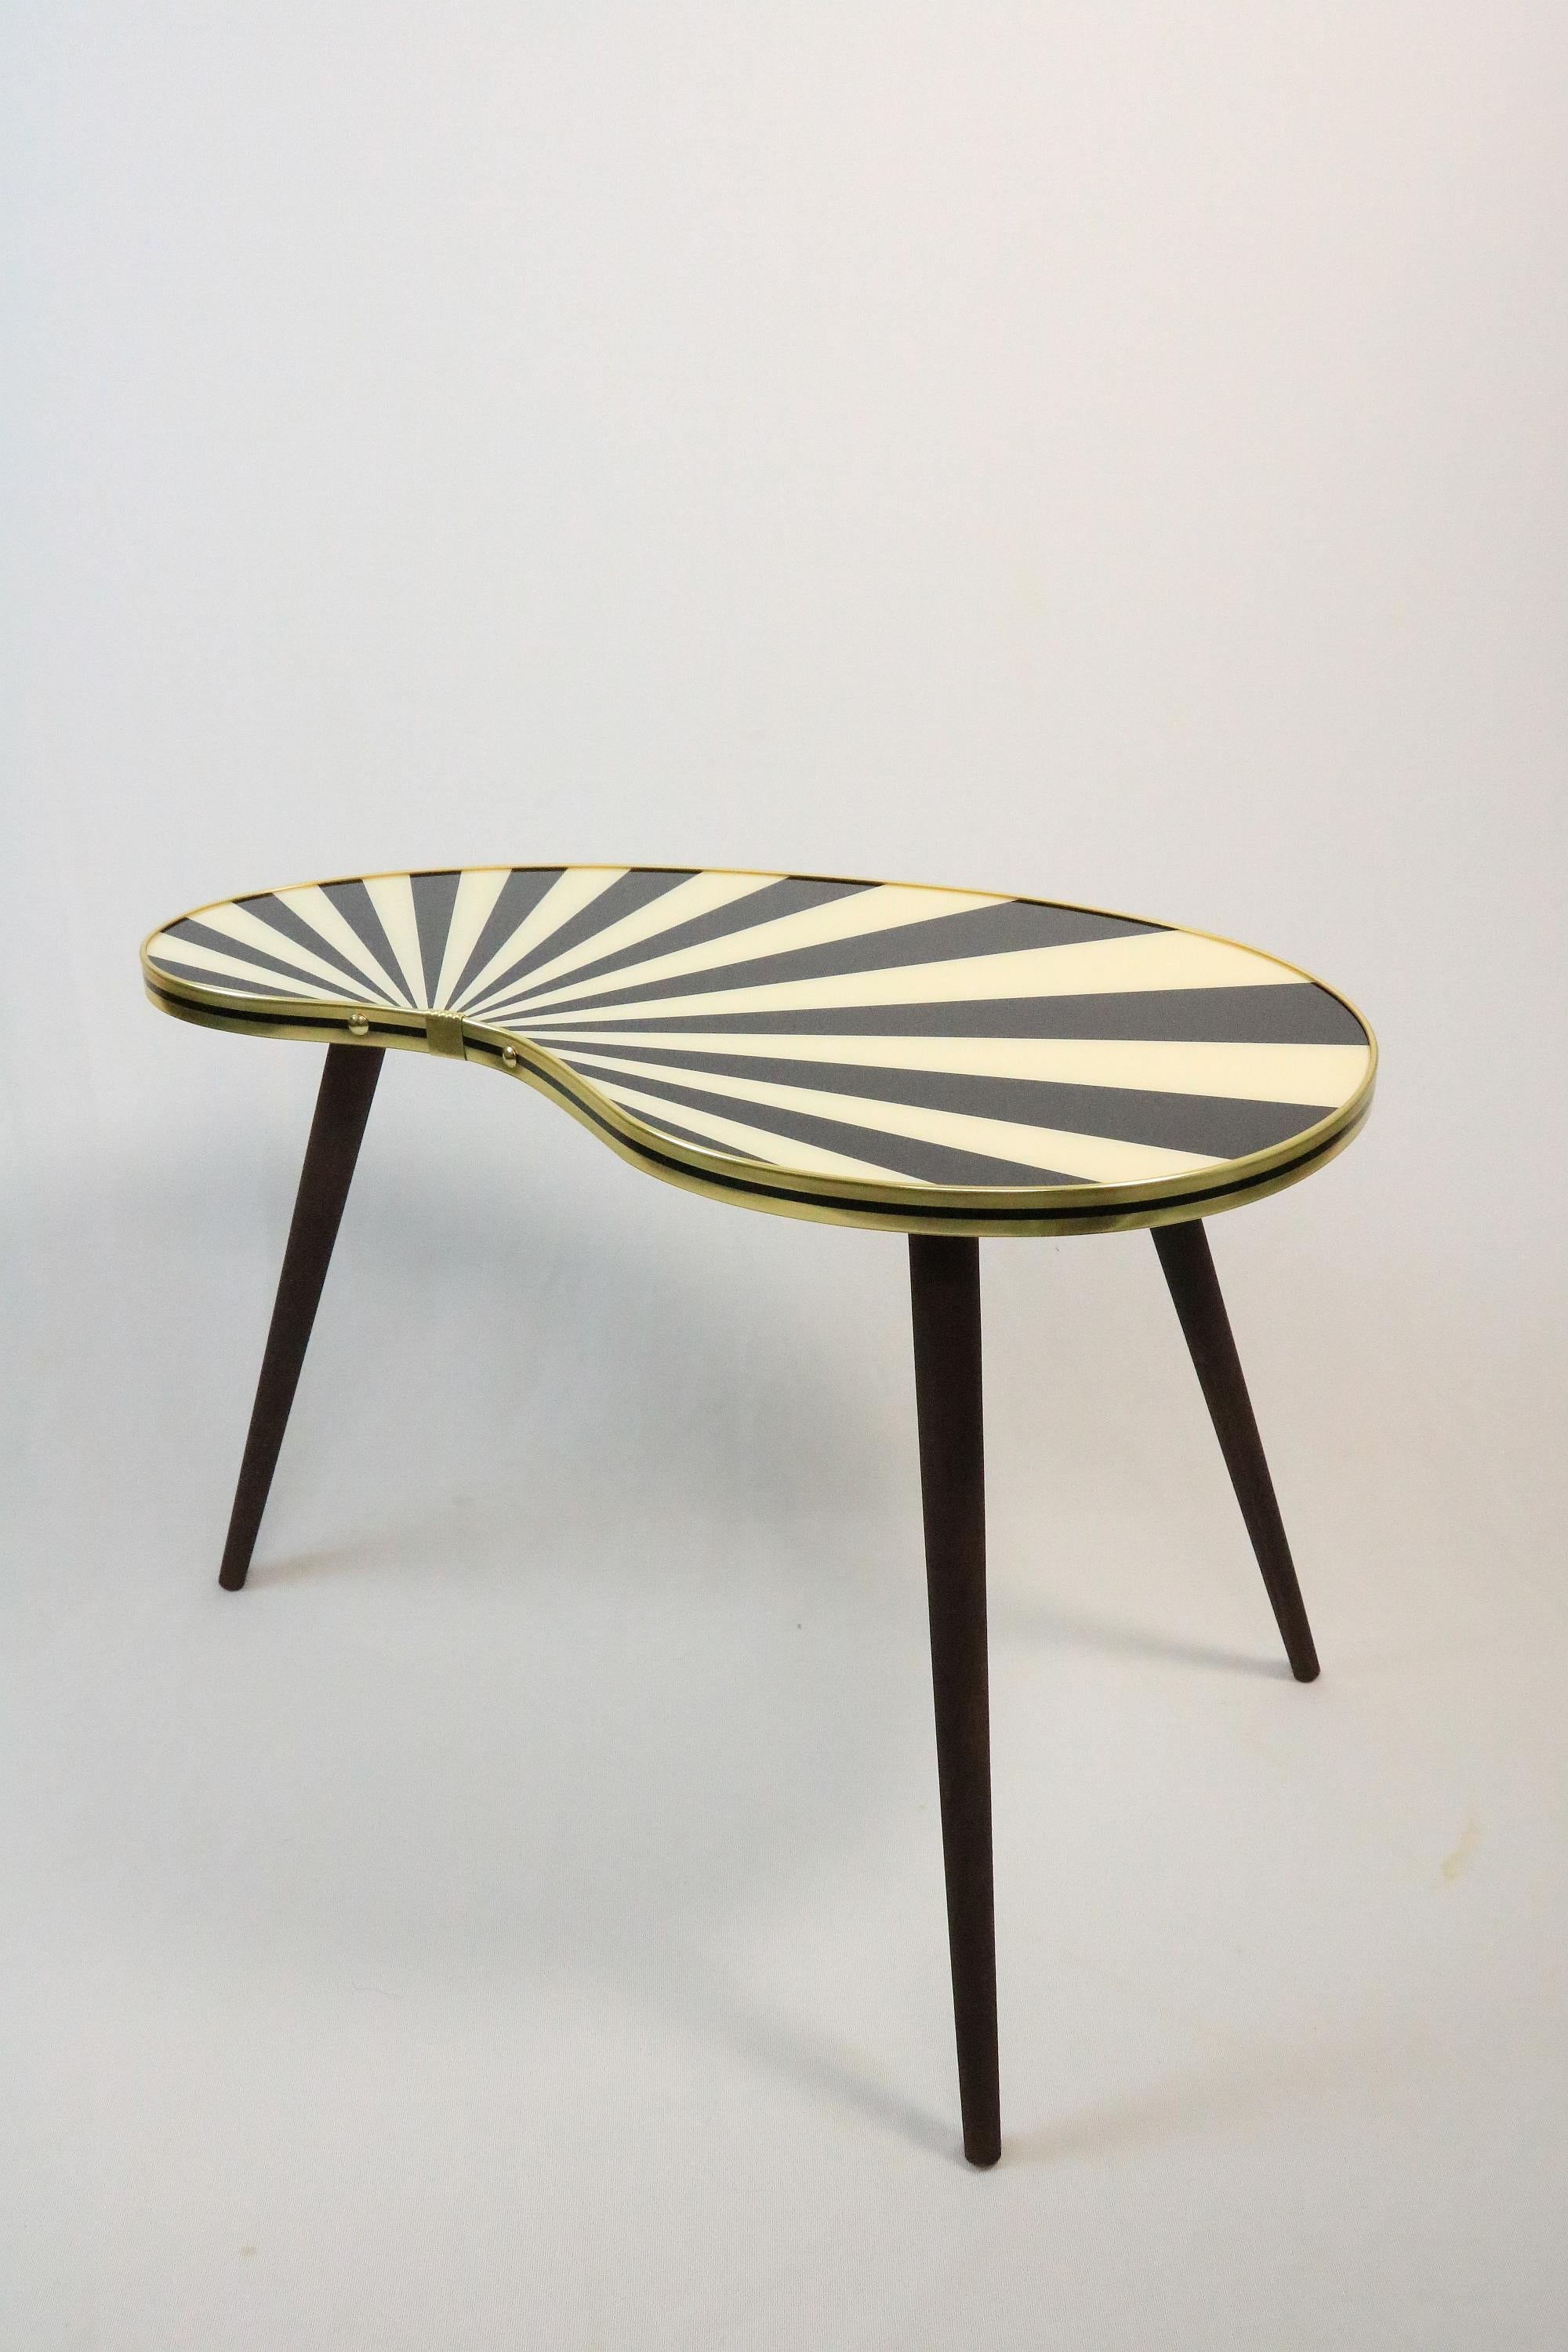 Mid-Century Modern Large Side Table, Kidney Shaped, Black-White Stripes, 3 Elegant Legs, 50s Style For Sale